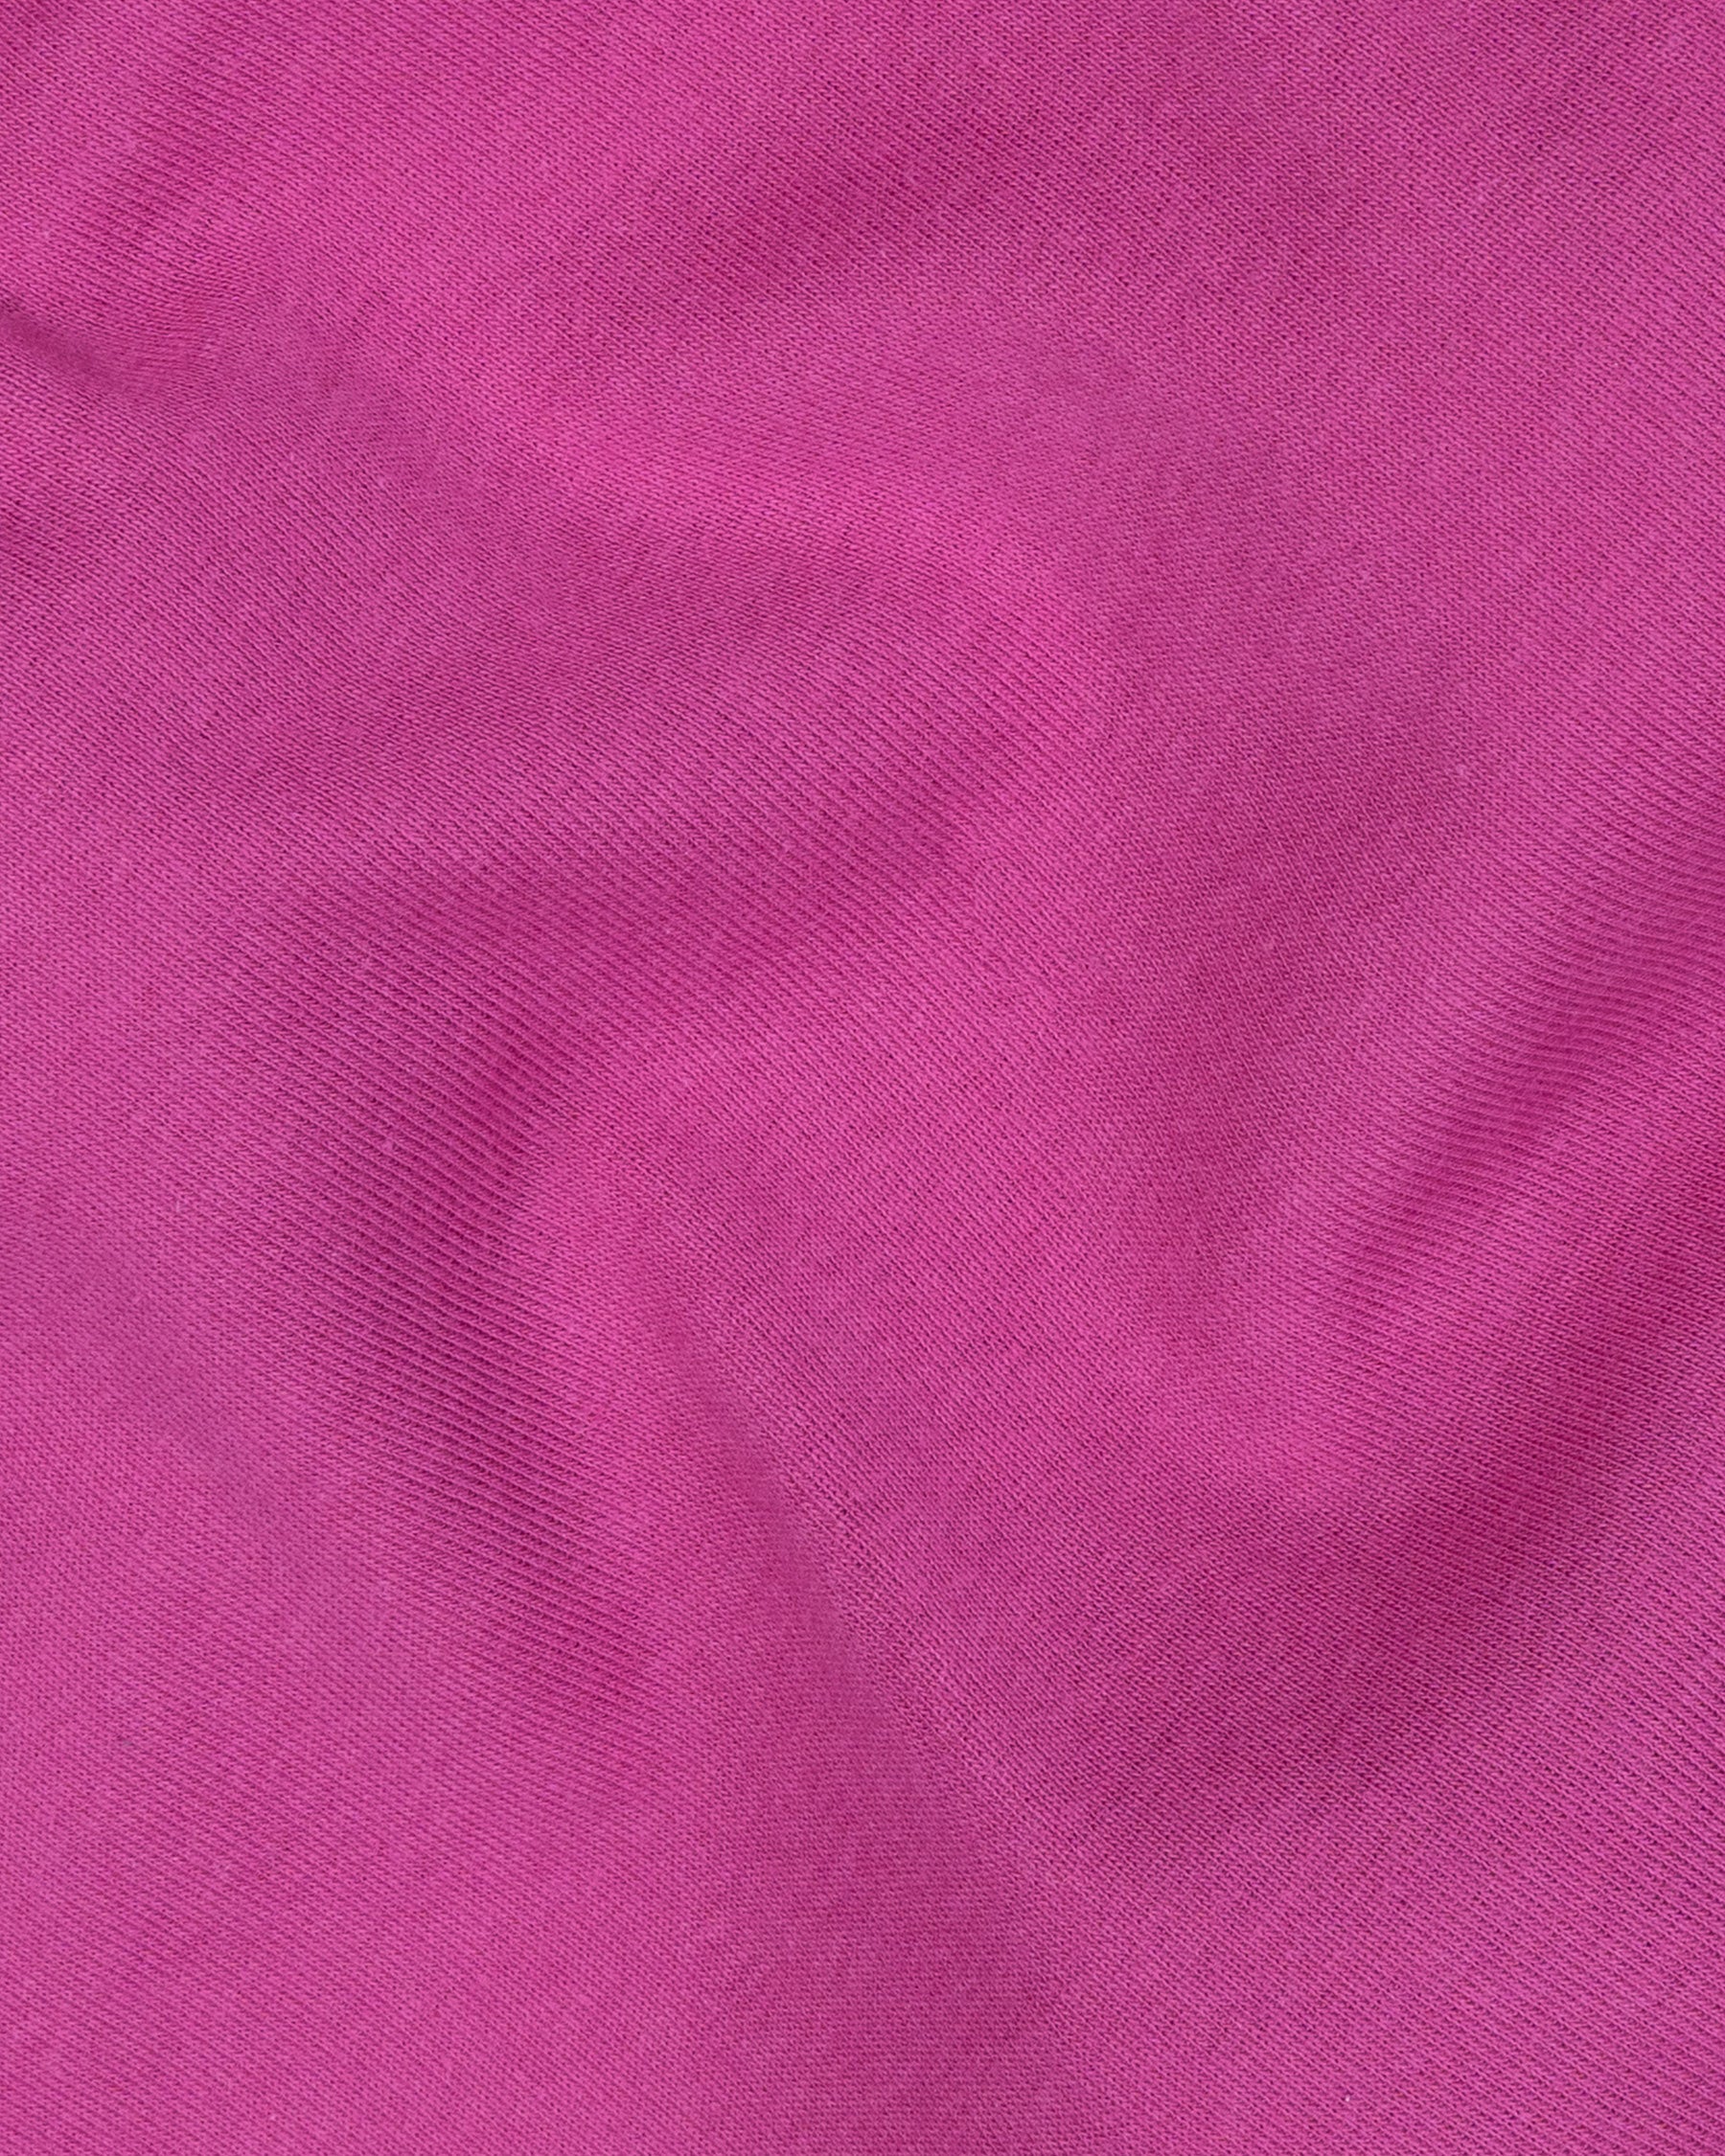 Mulberry Pink Full Sleeve Super Soft Premium Cotton Sweatshirt TS460-S, TS460-M, TS460-L, TS460-XL, TS460-XXL